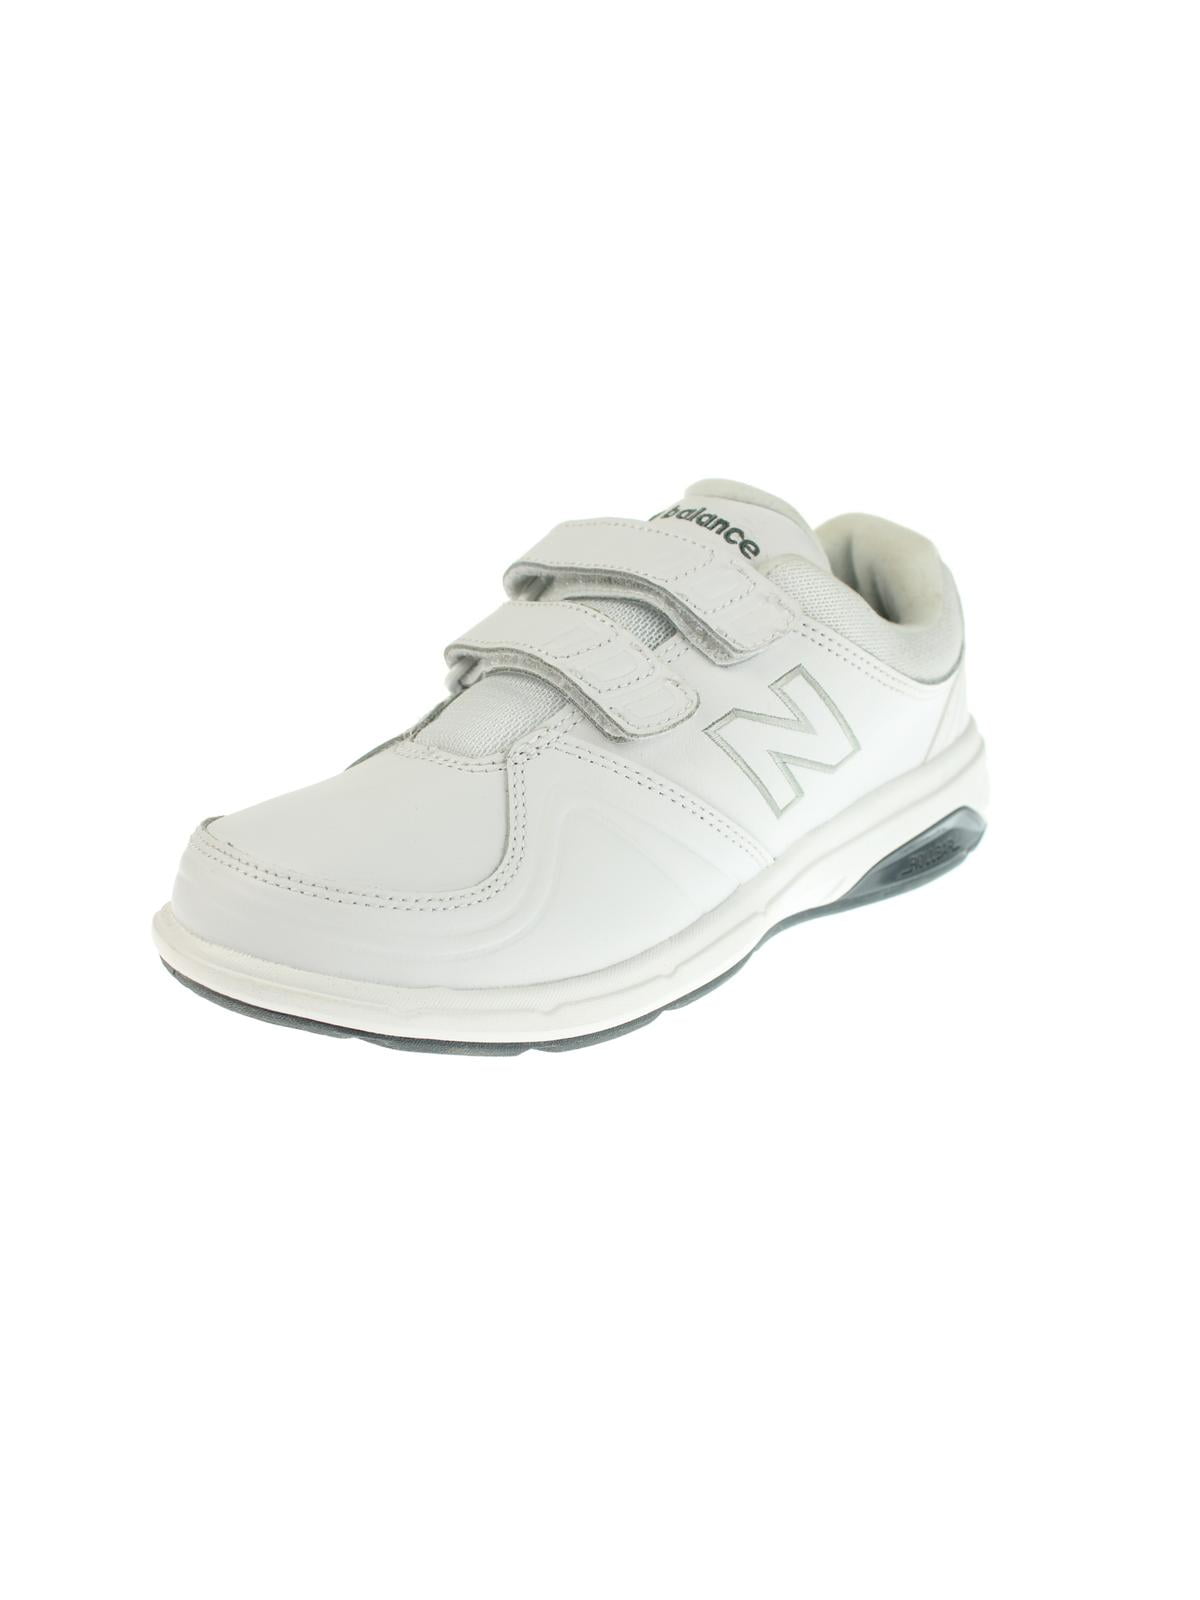 New Balance 577 Velcro Walking Shoes Womens | lupon.gov.ph